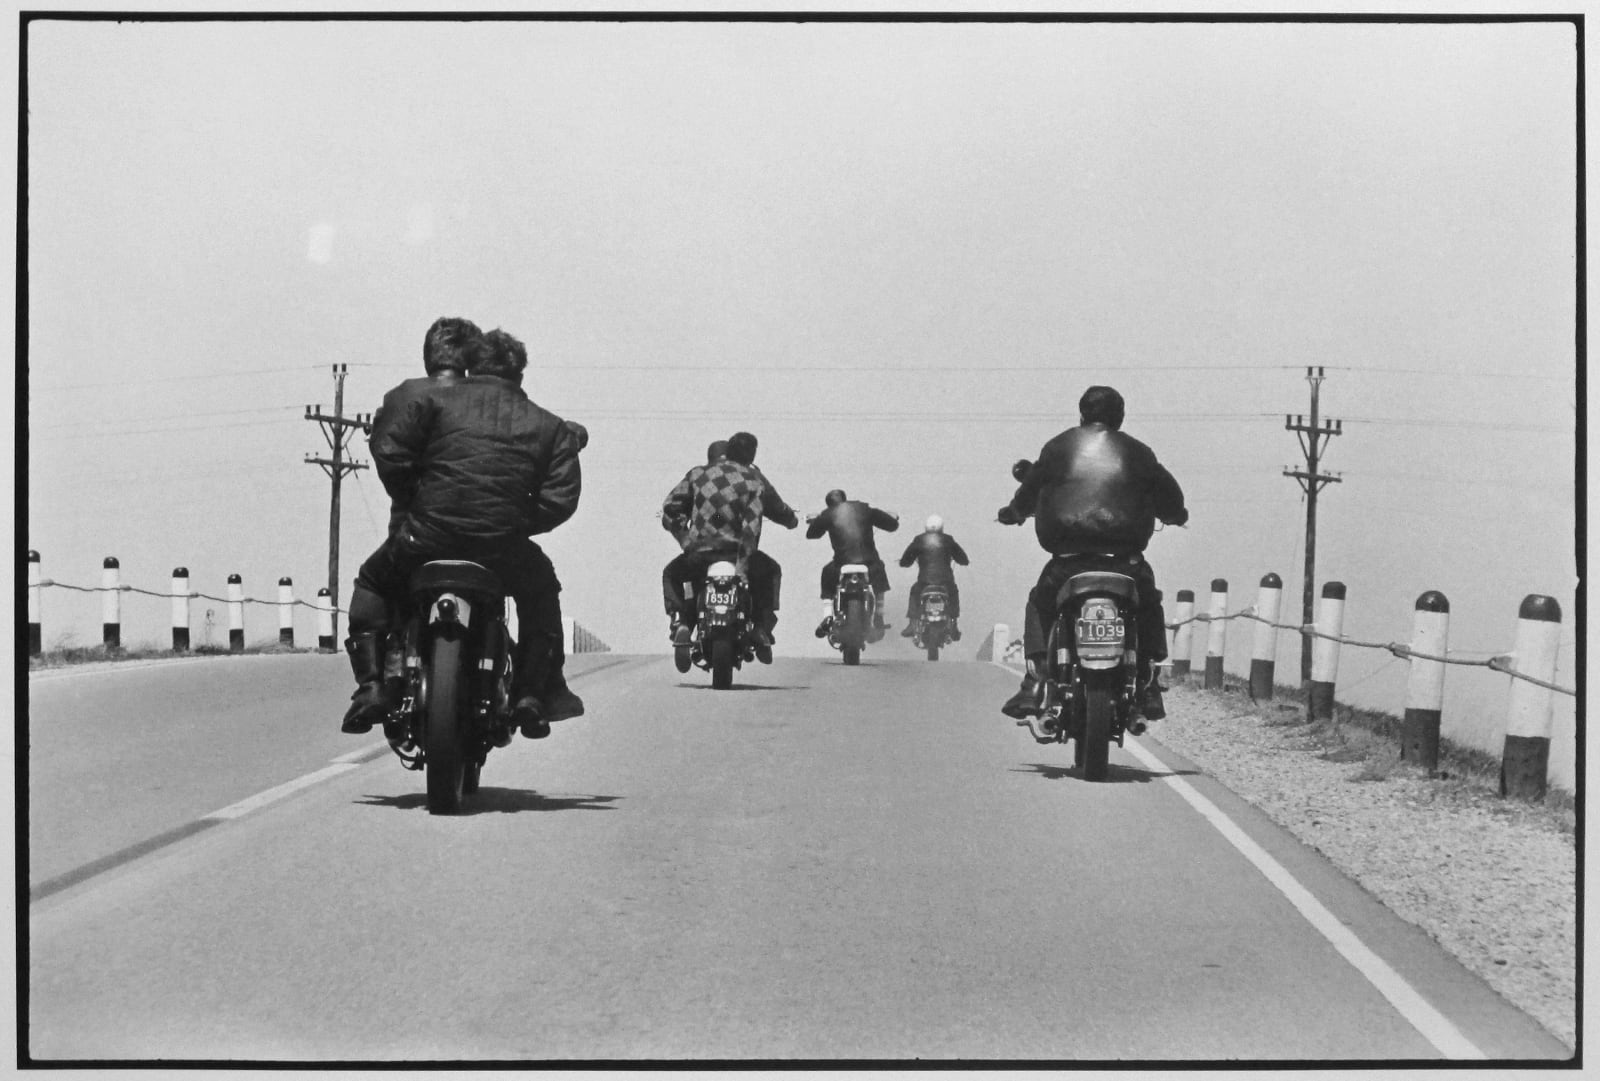 Danny Lyon, Route 12 Wisconsin, 1963